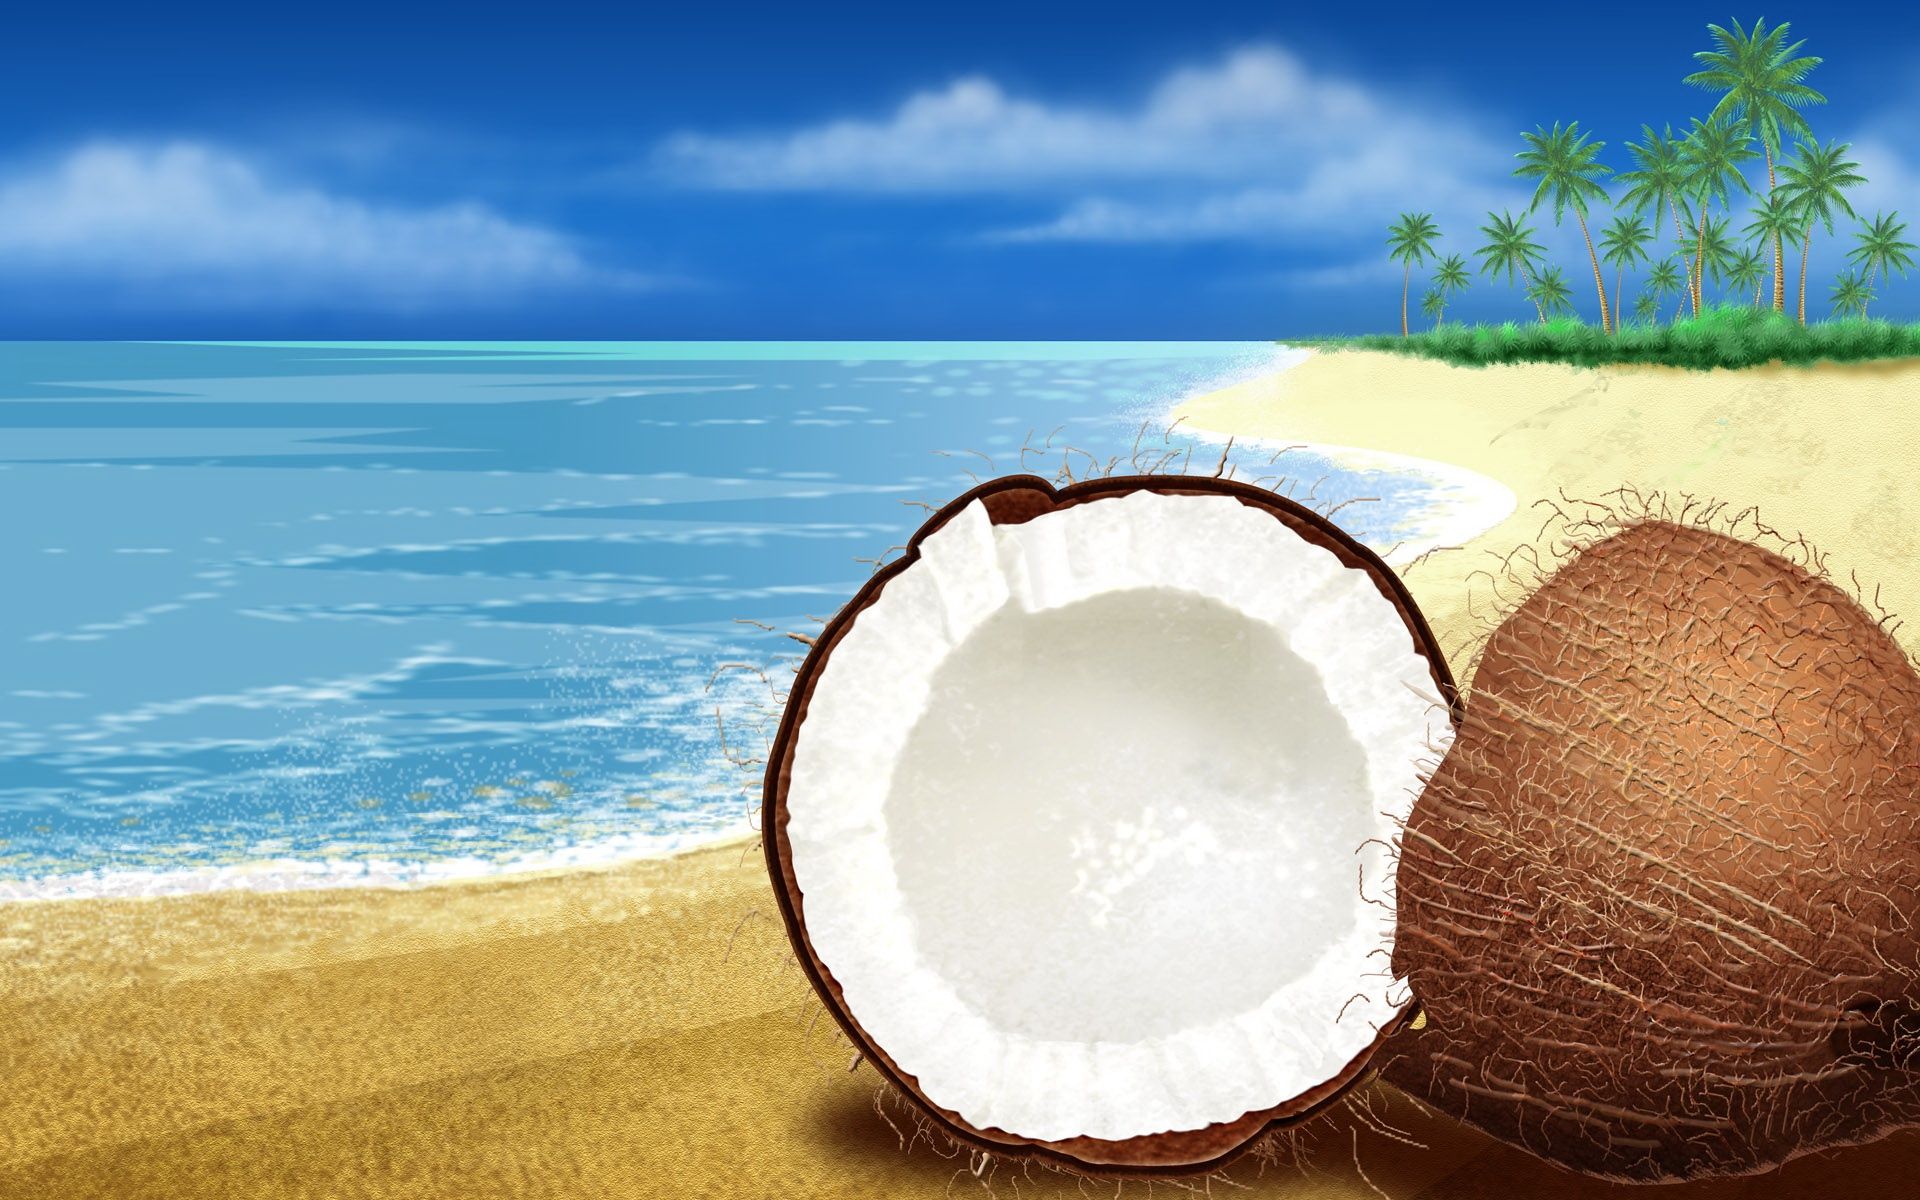 Coconut Tree Animated - wallpaper.